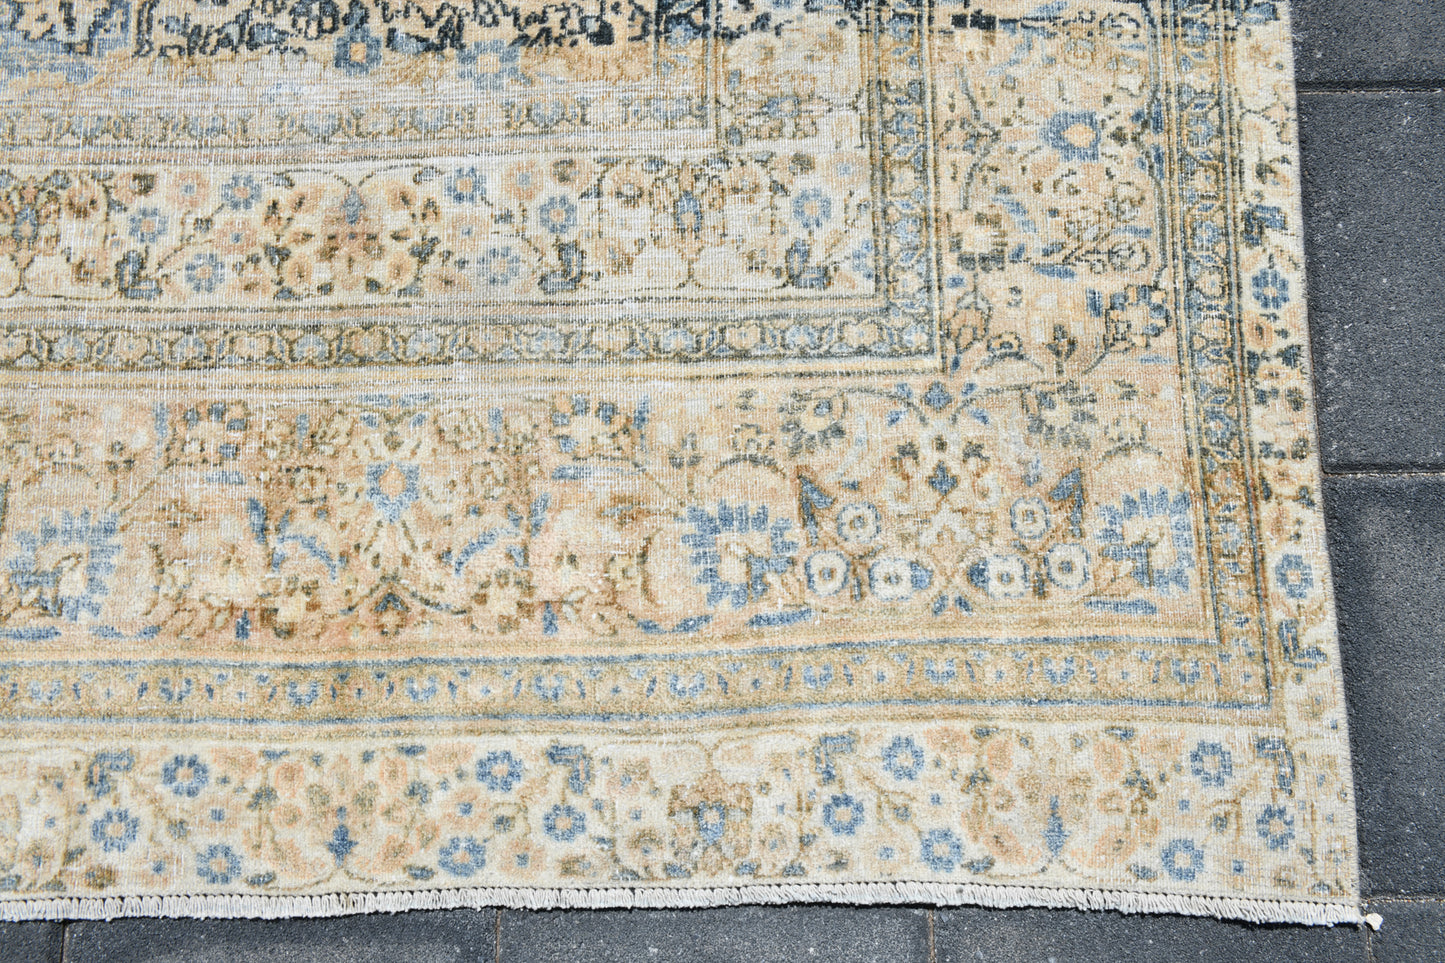 9'9" x 12'8" Vintage Persian Rug - 17541